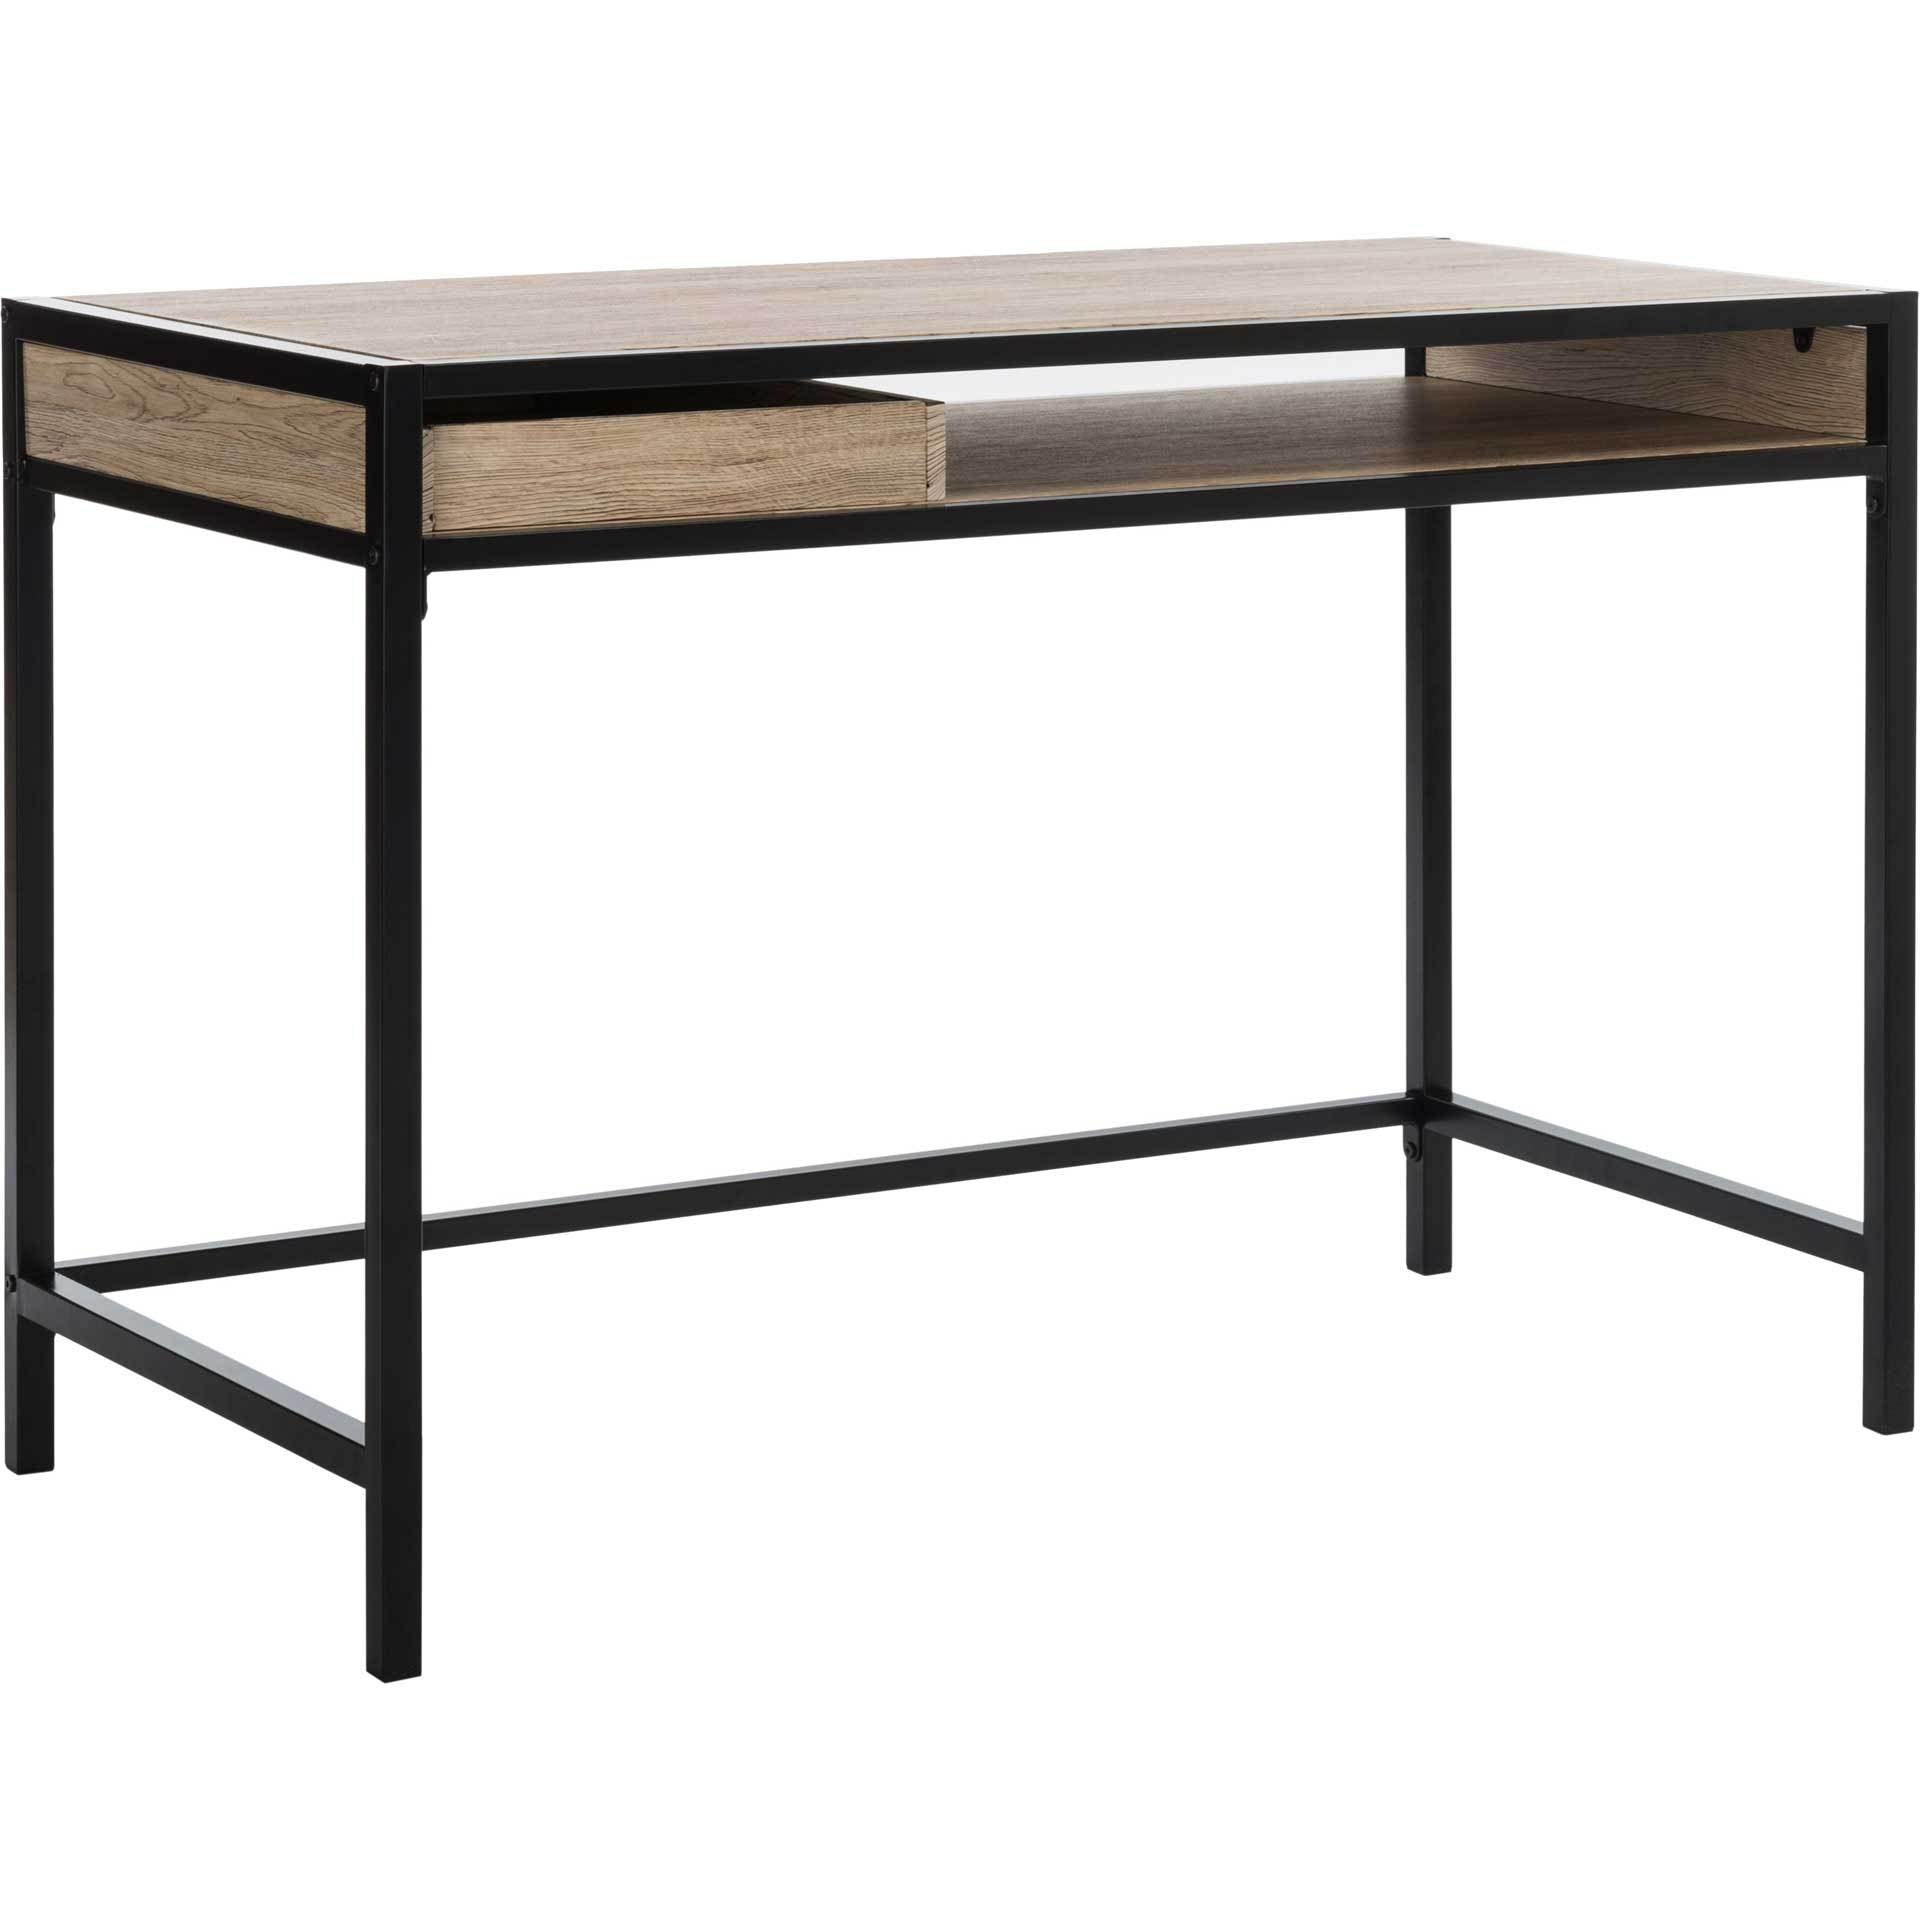 Aleena 1 Shelf Desk With Drawer